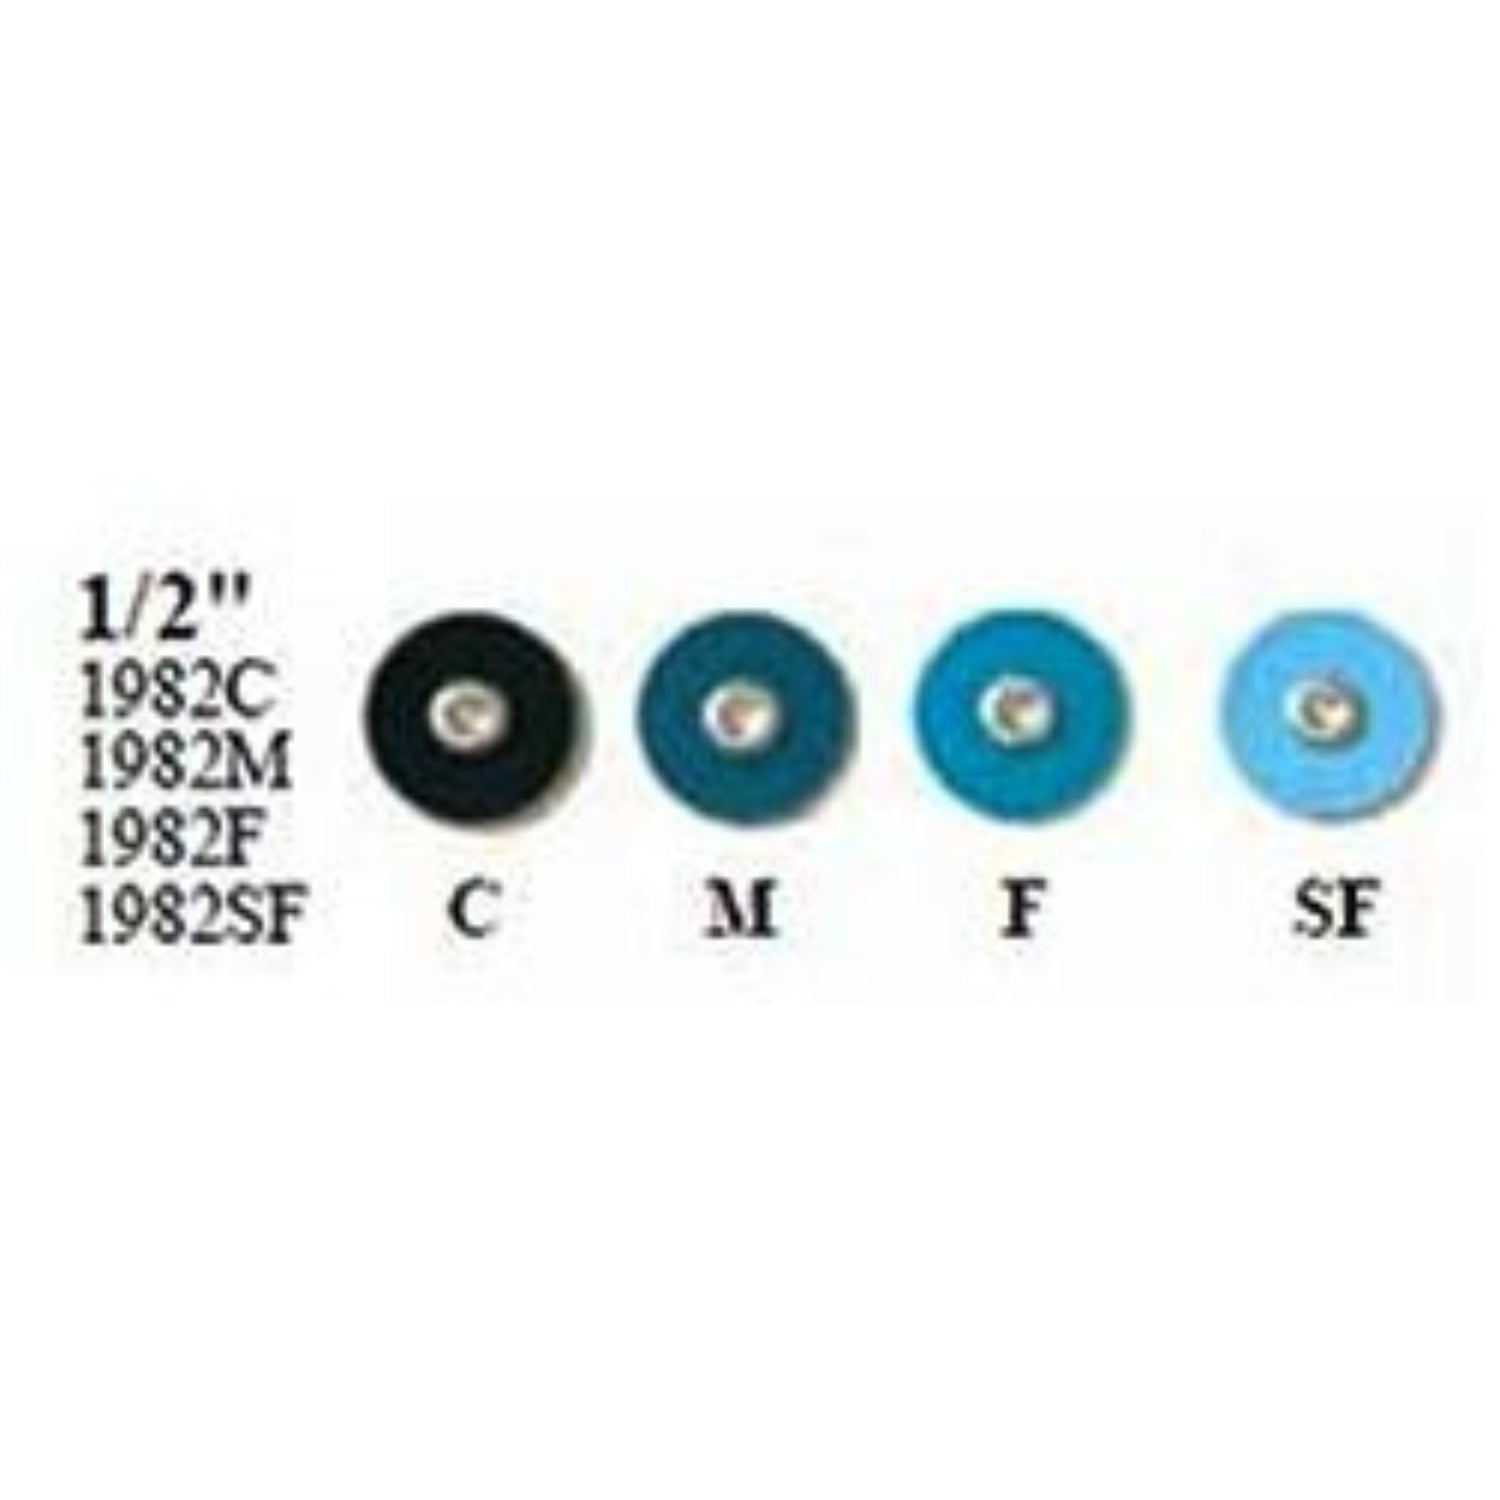 3m-espe-sof-lex-12-finishing-and-polishing-discs-black85pk